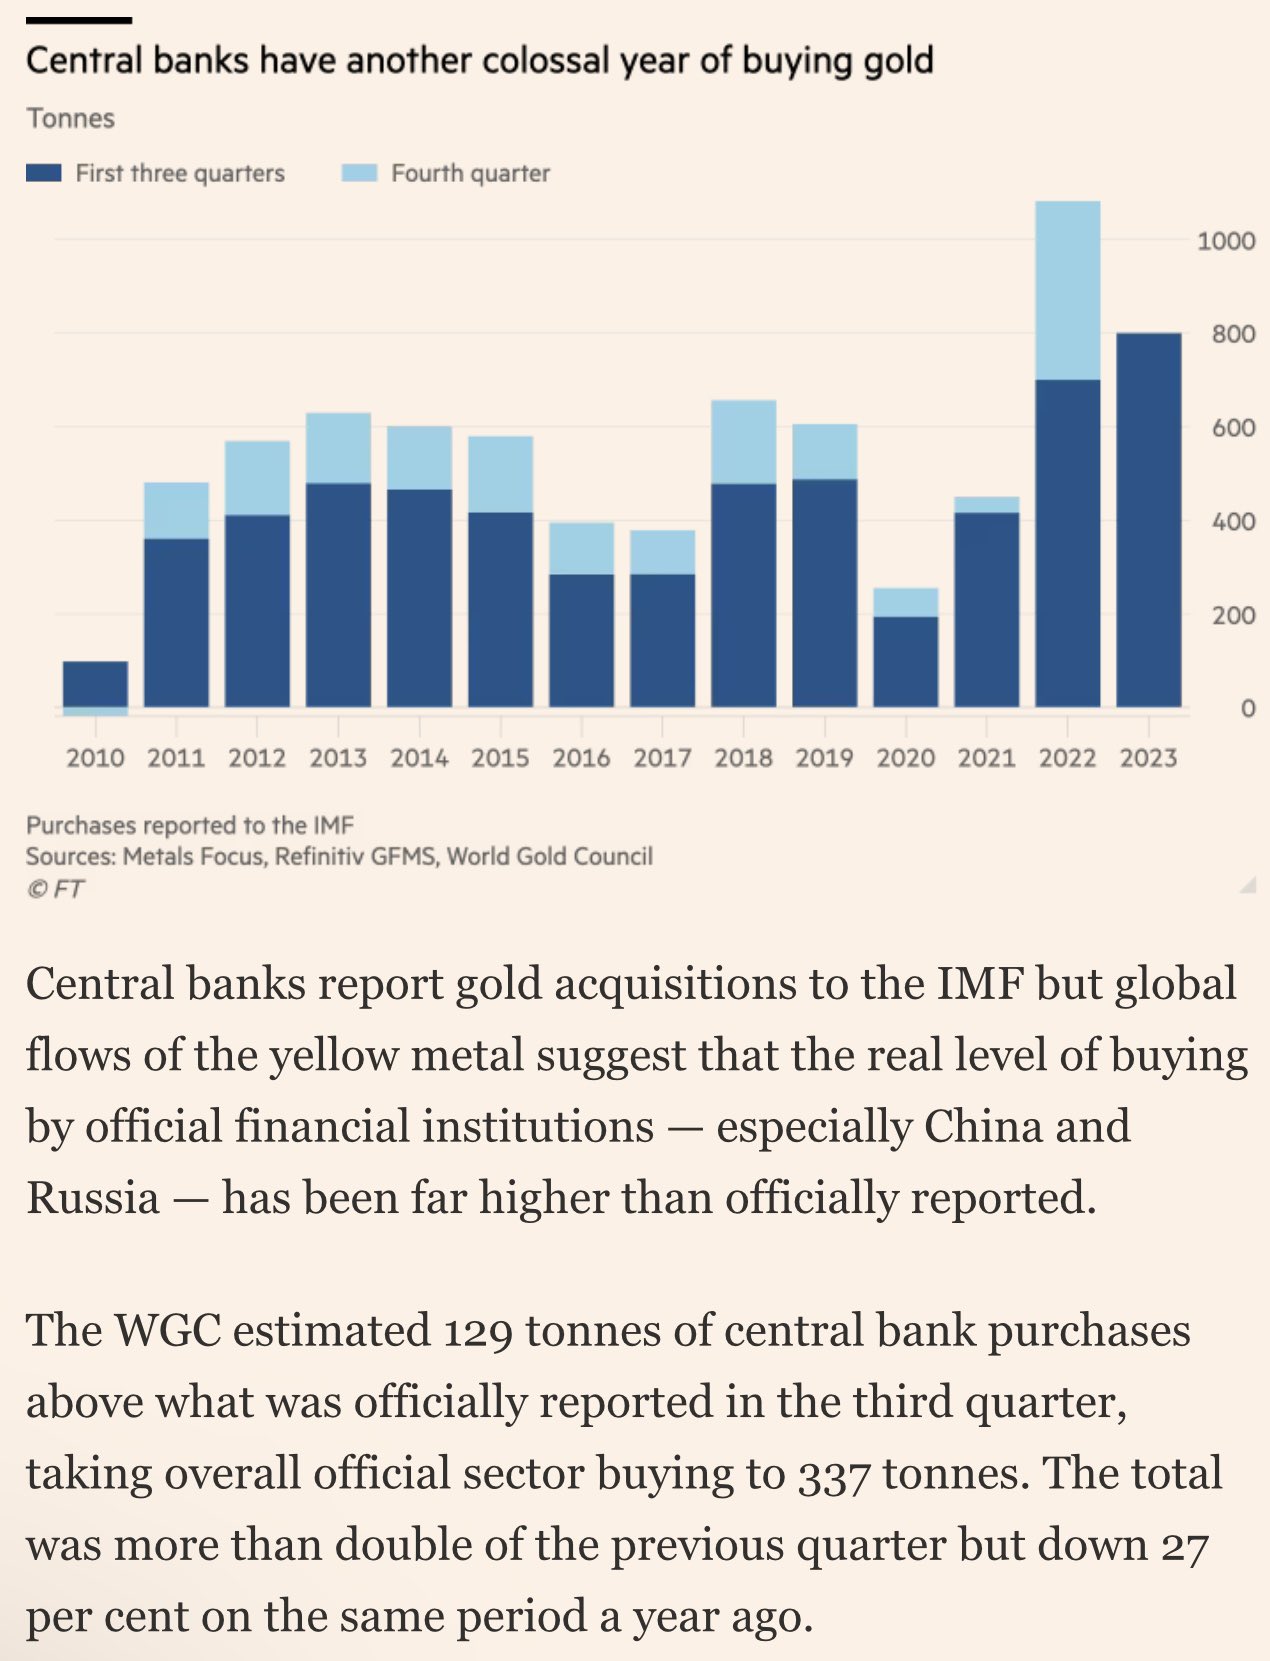 Gold rallies as geopolitical turmoil overshadows rising bond yields